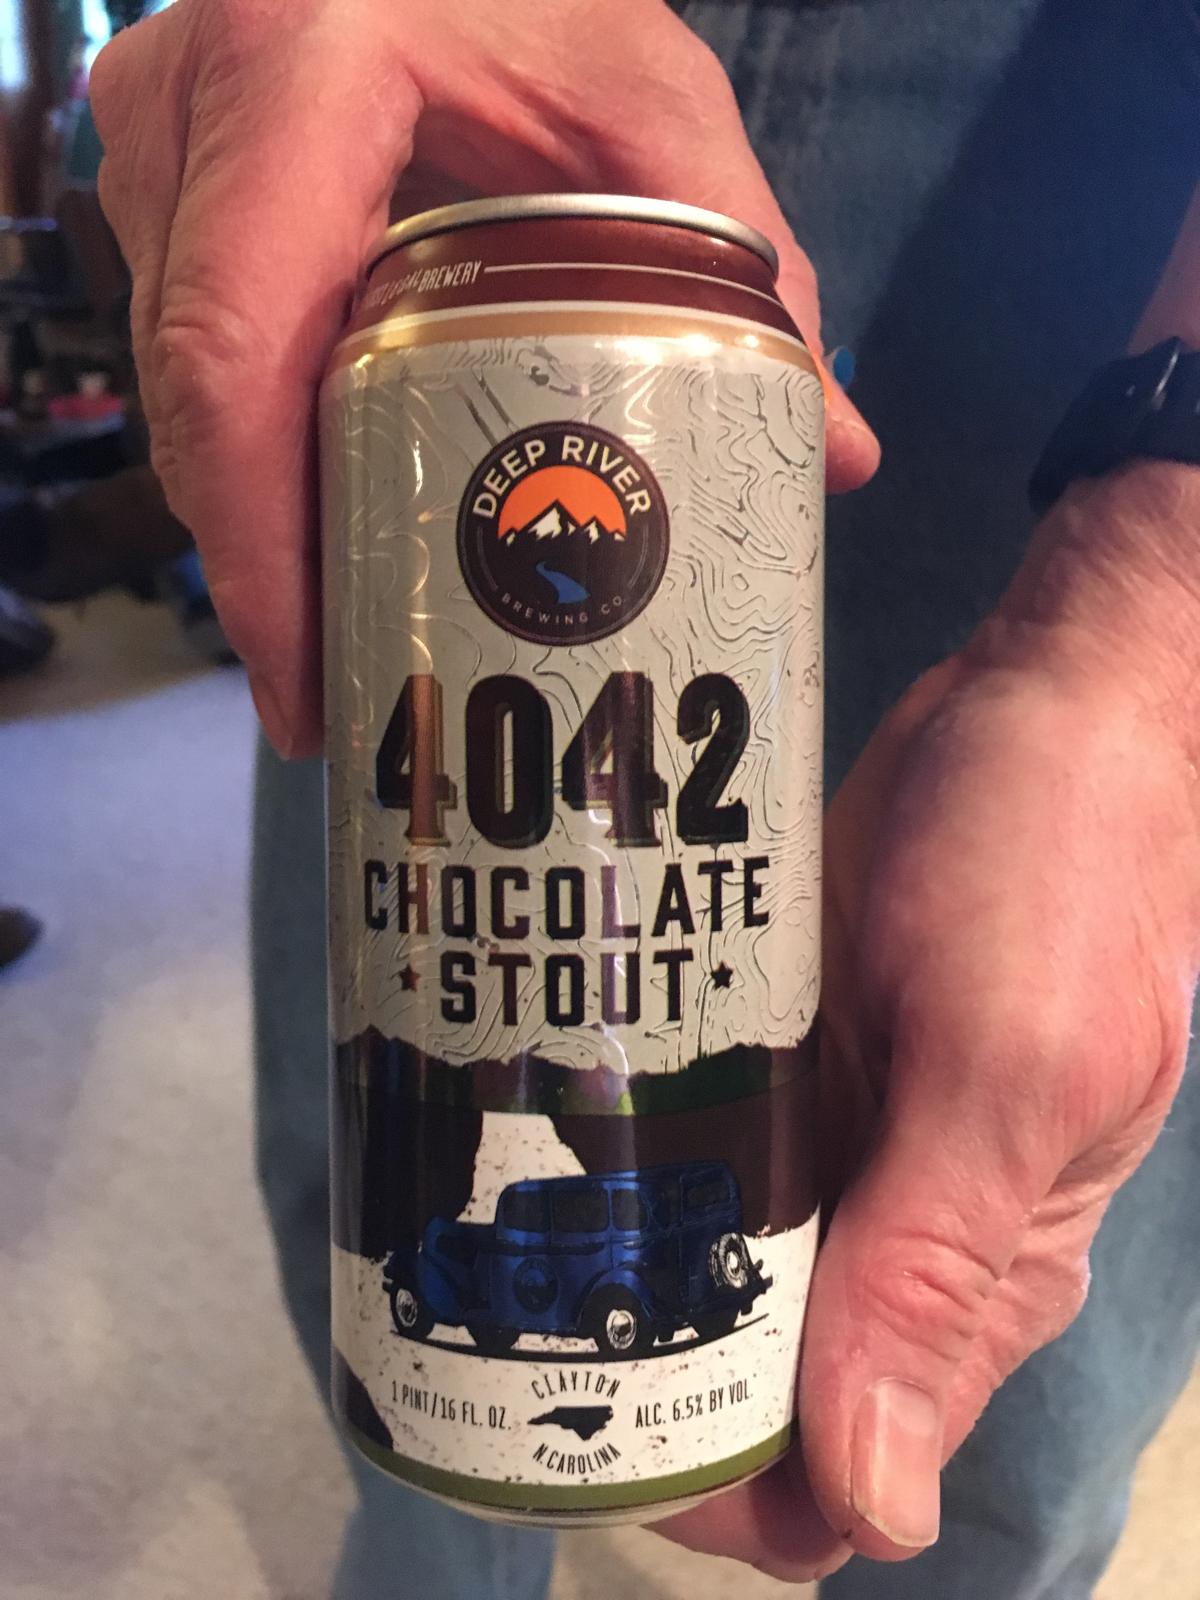 4042 Chocolate Stout